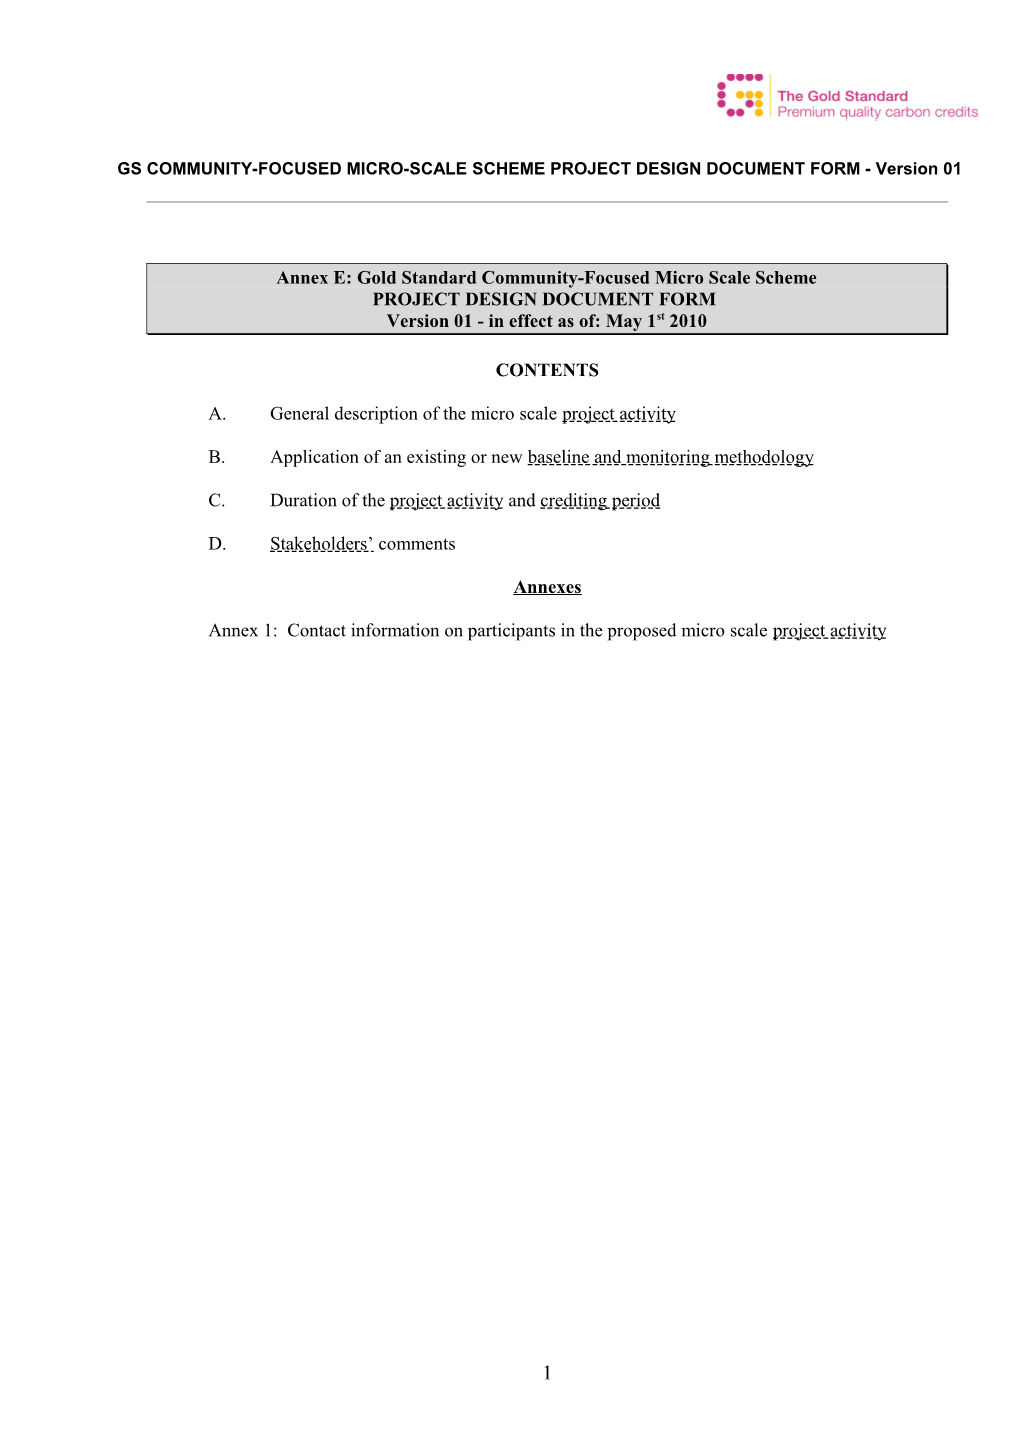 Clean Development Mechanism Project Design Document Form (CDM-SSC-PDD). (Version 03)